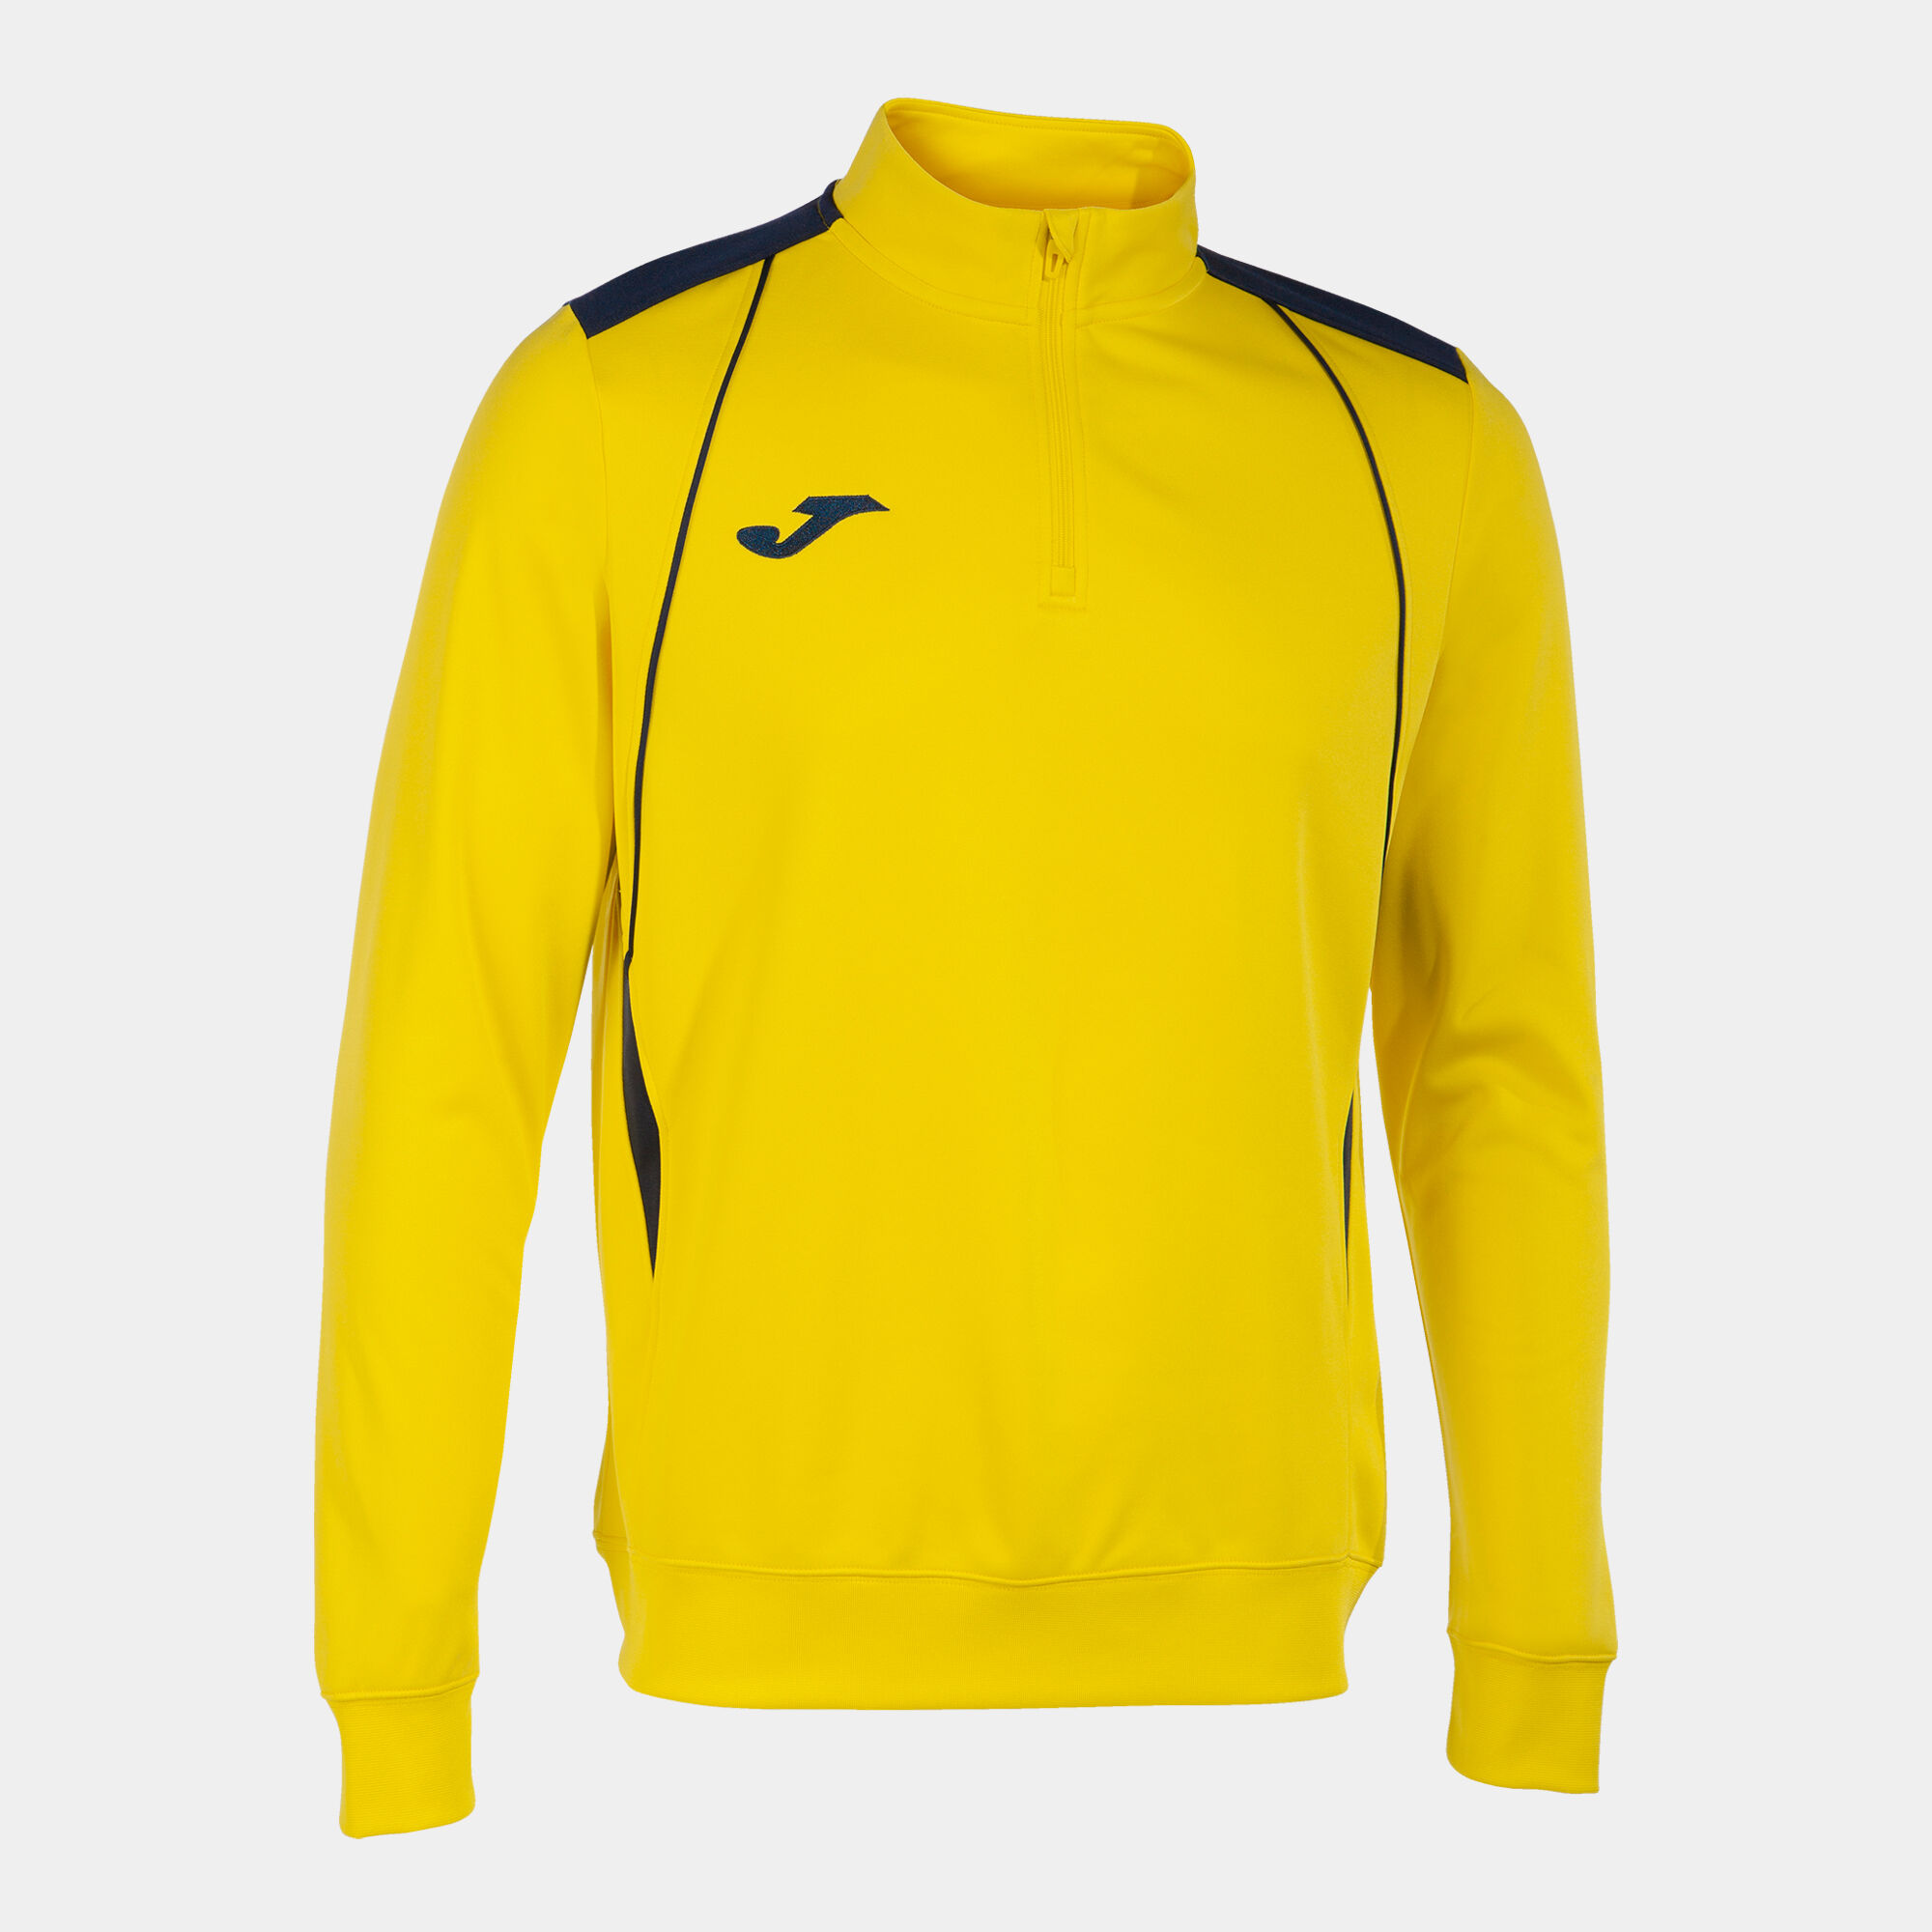 Sweat-shirt homme Championship VII jaune bleu marine